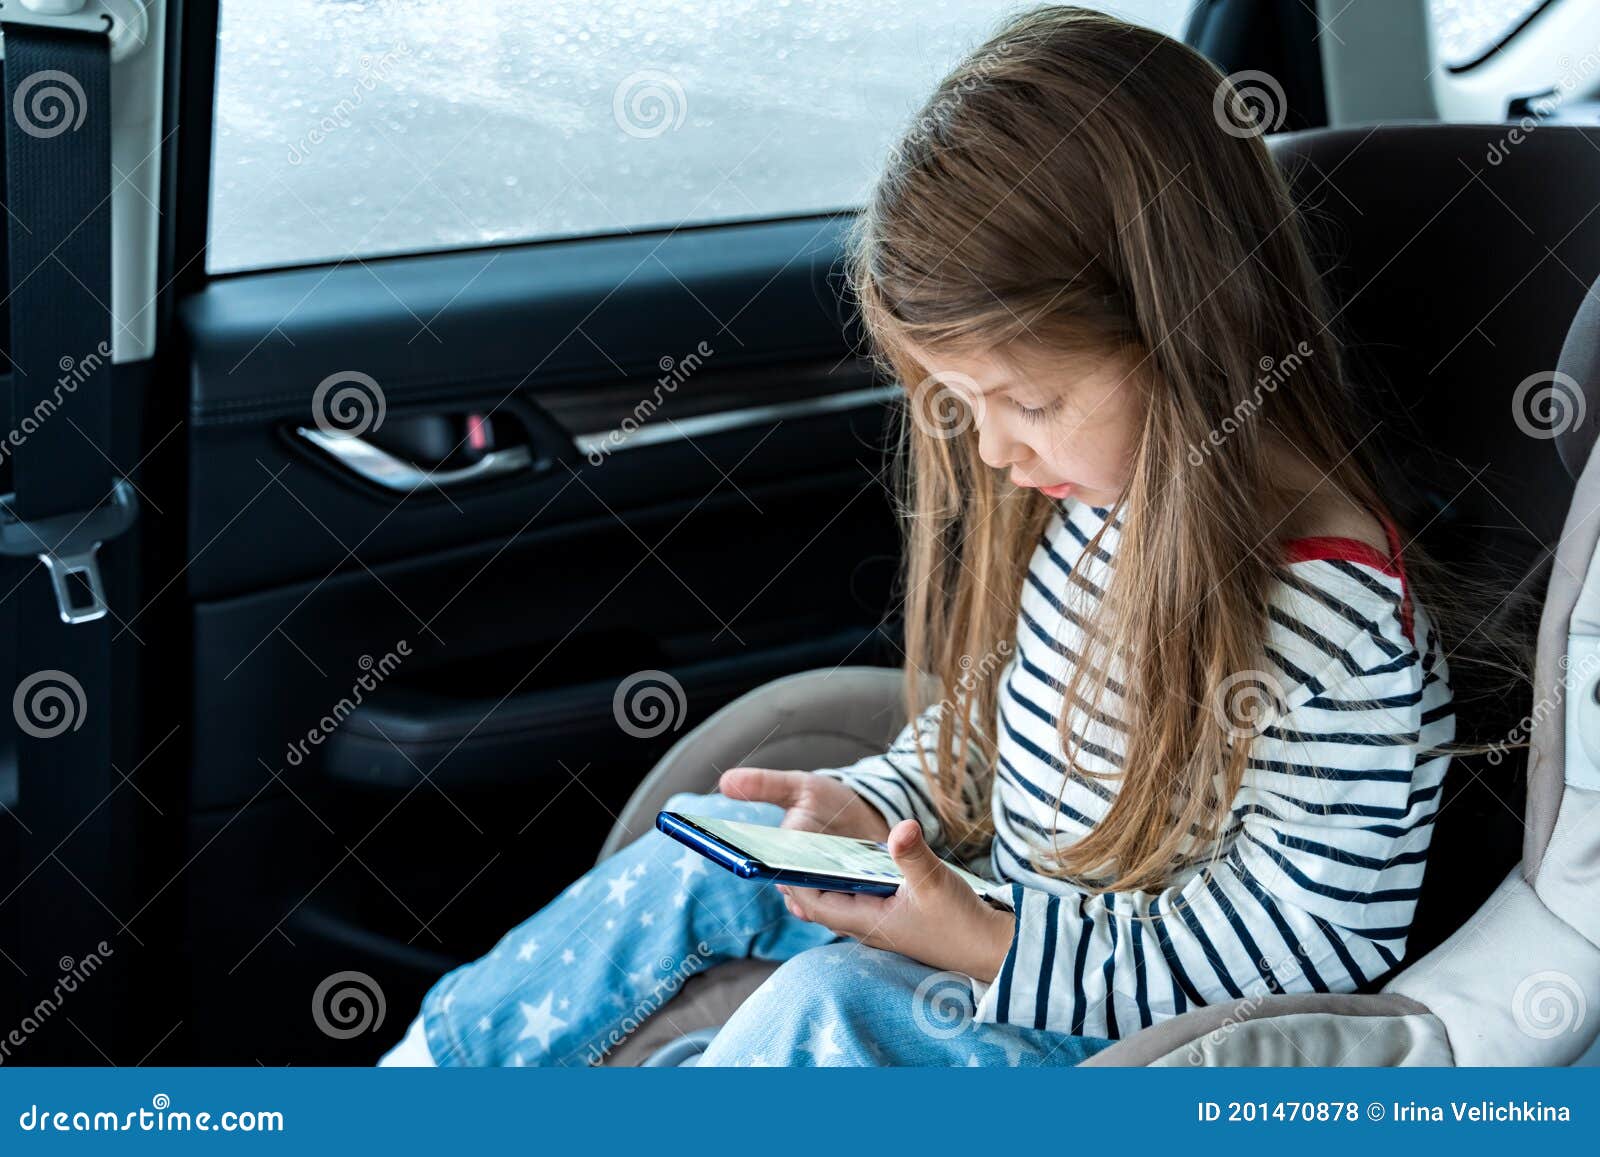 Driving Games - Safe Kid Games